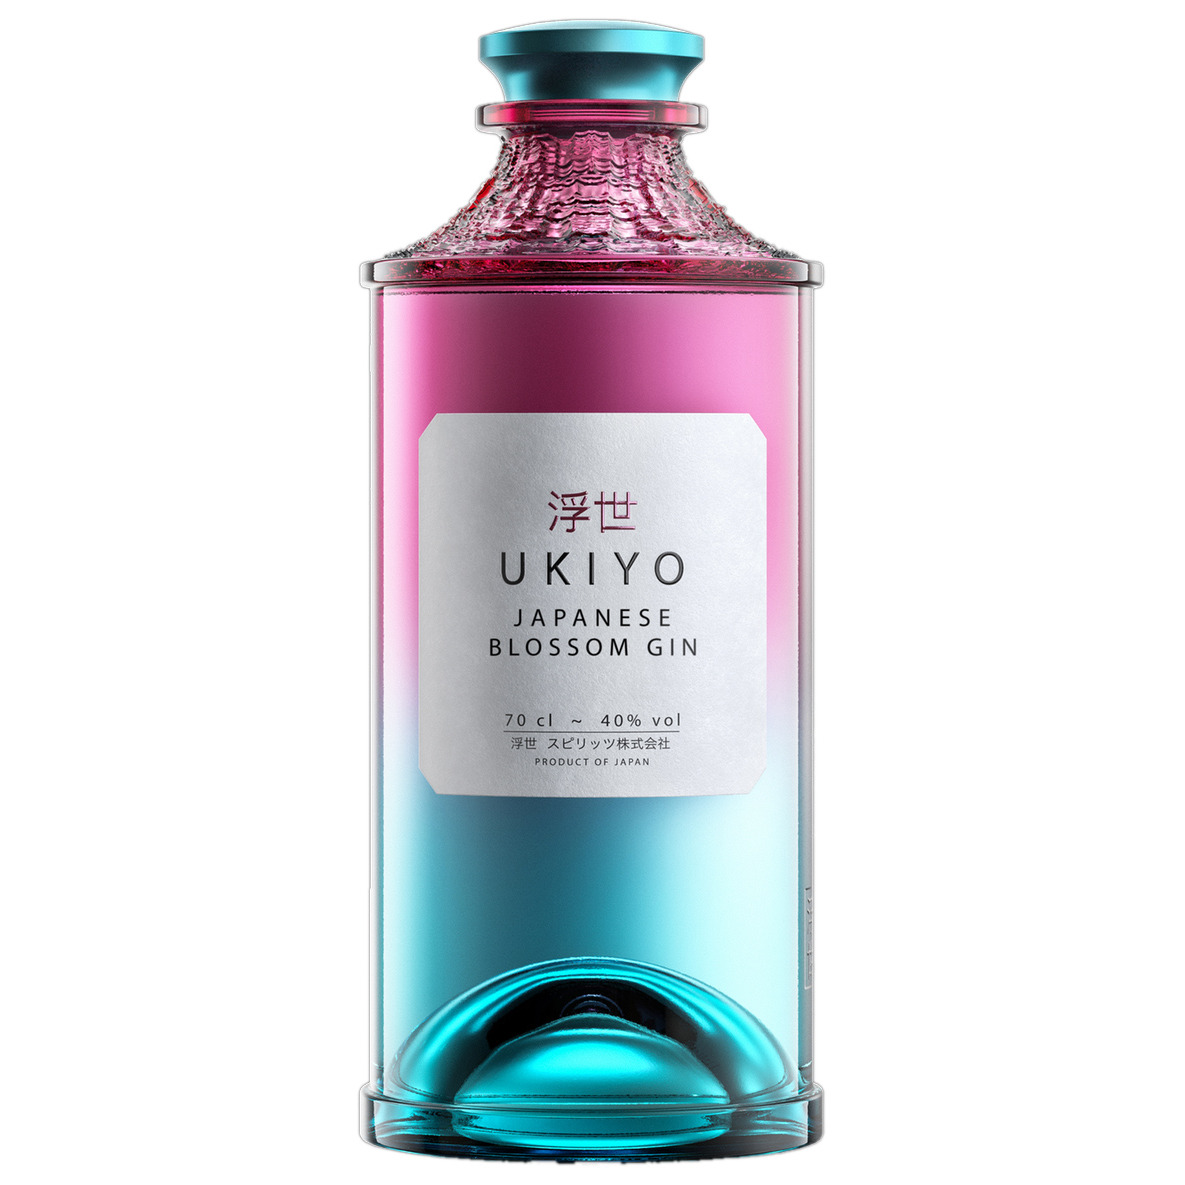 Ukiyo - Japanese Blossom Gin 70cl